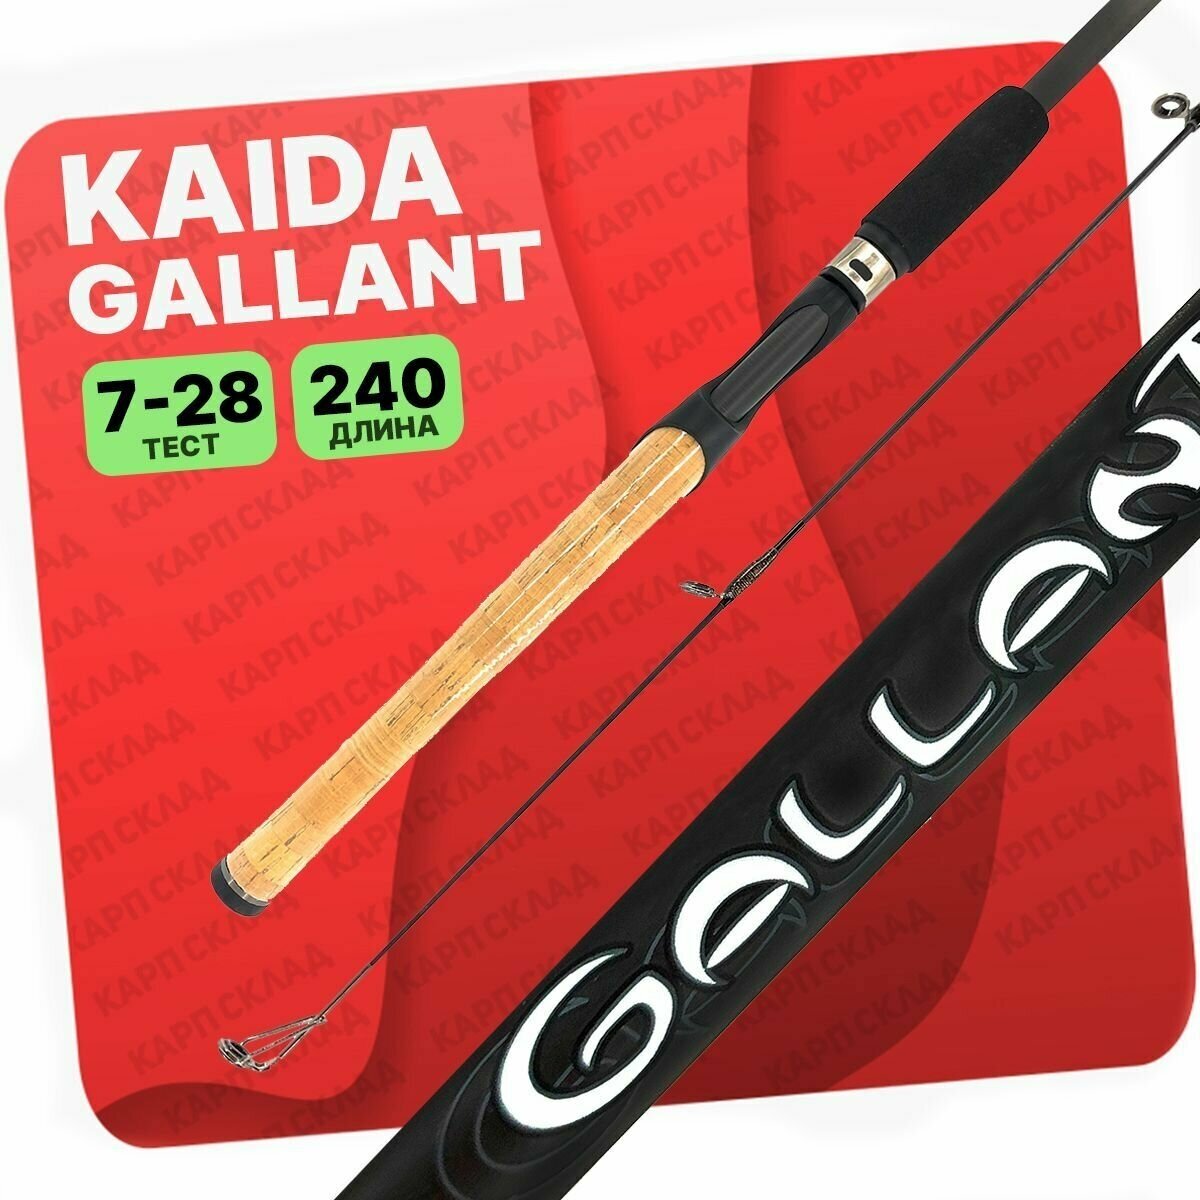 Спиннинг телескопический Kaida GALLANT тест 7-28g, 2,4м